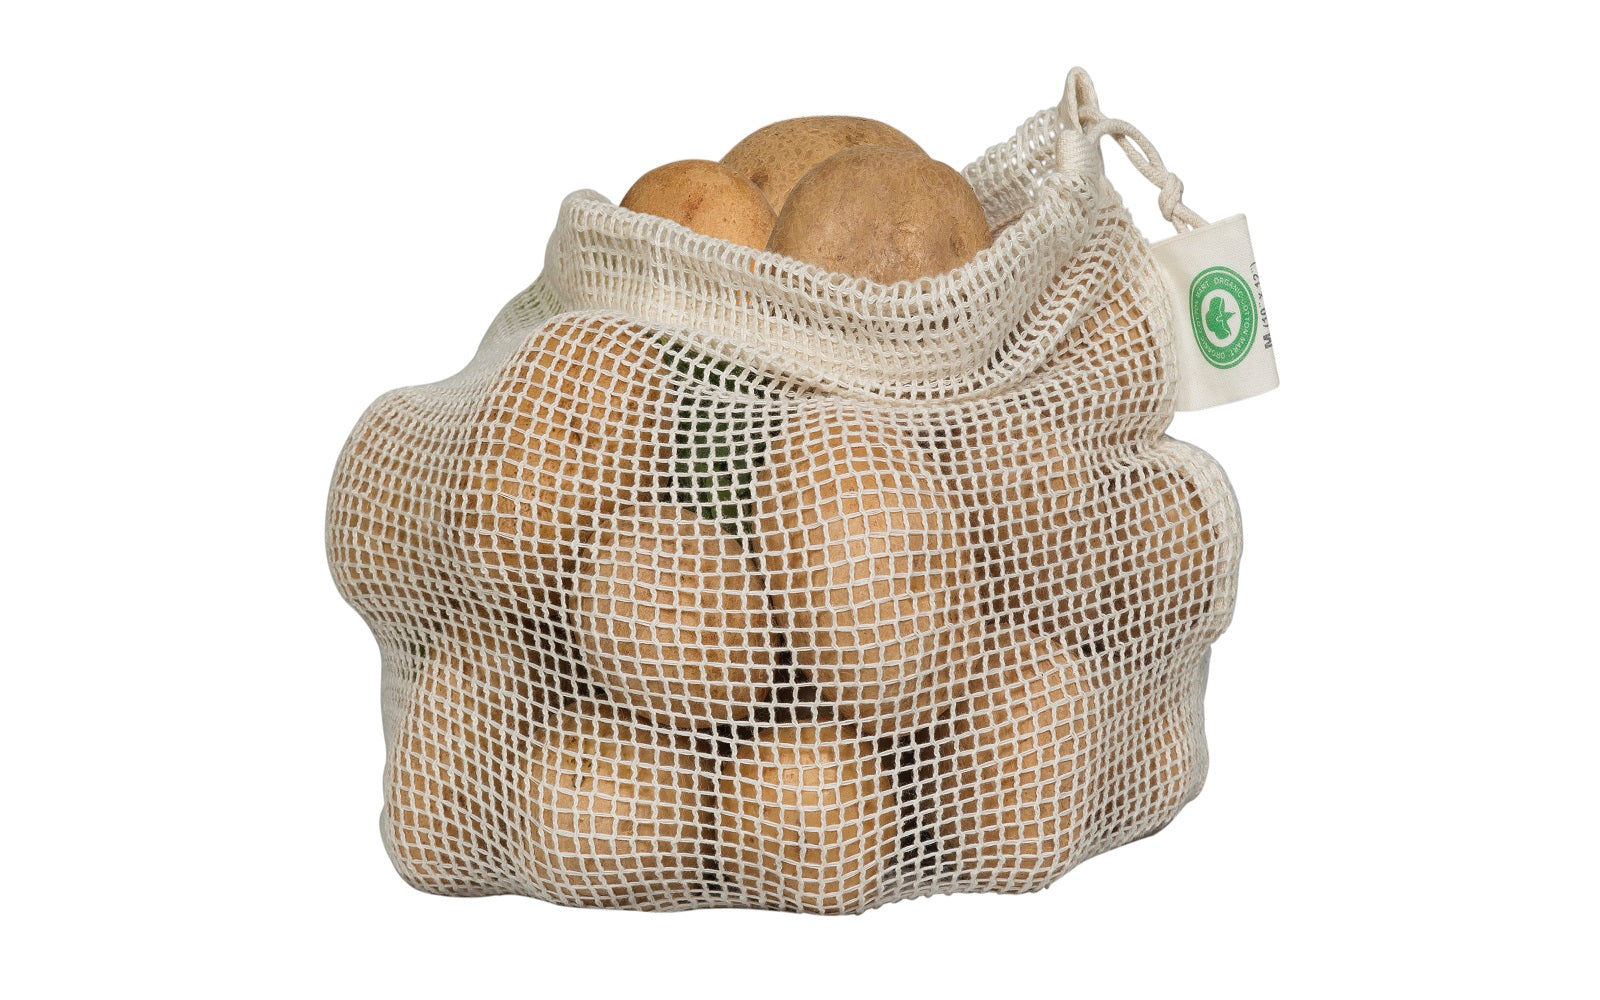 Mesh Produce Bags 8 Bags (2xl, 2L, 2M, 2S)